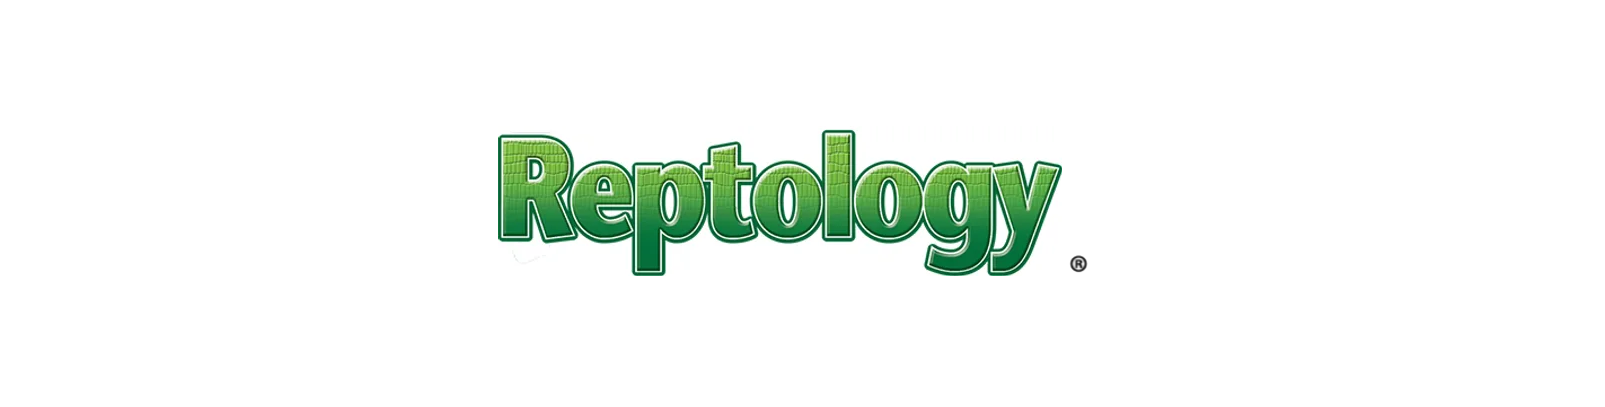 Reptology